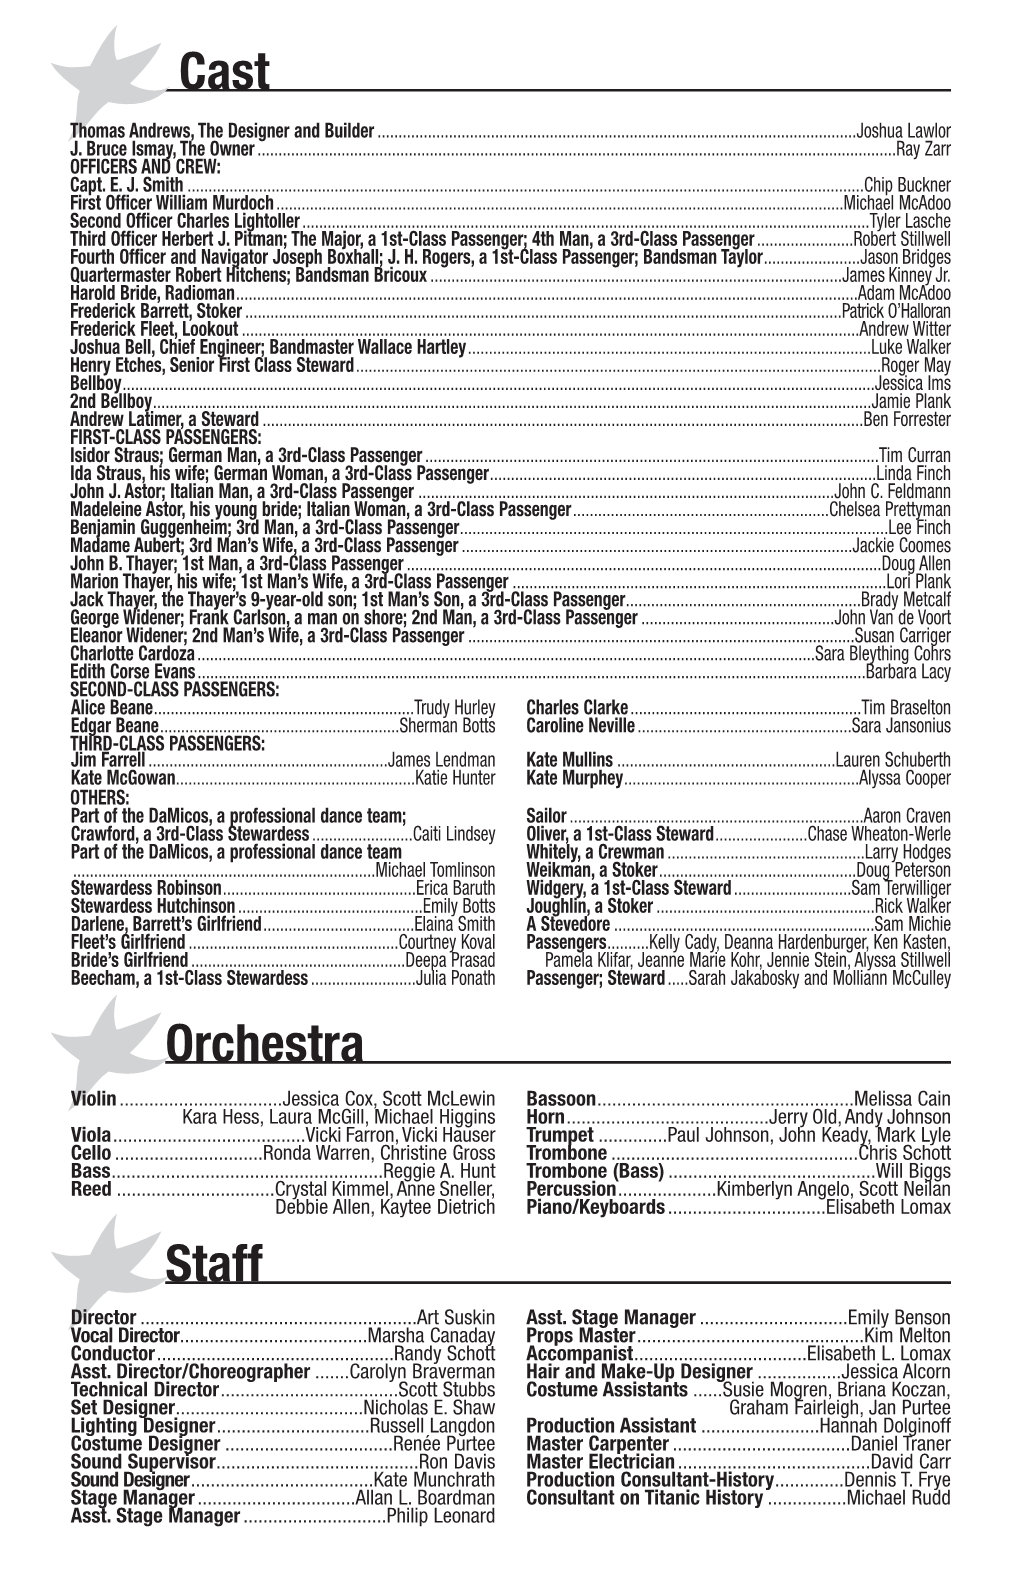 Cast Orchestra Staff